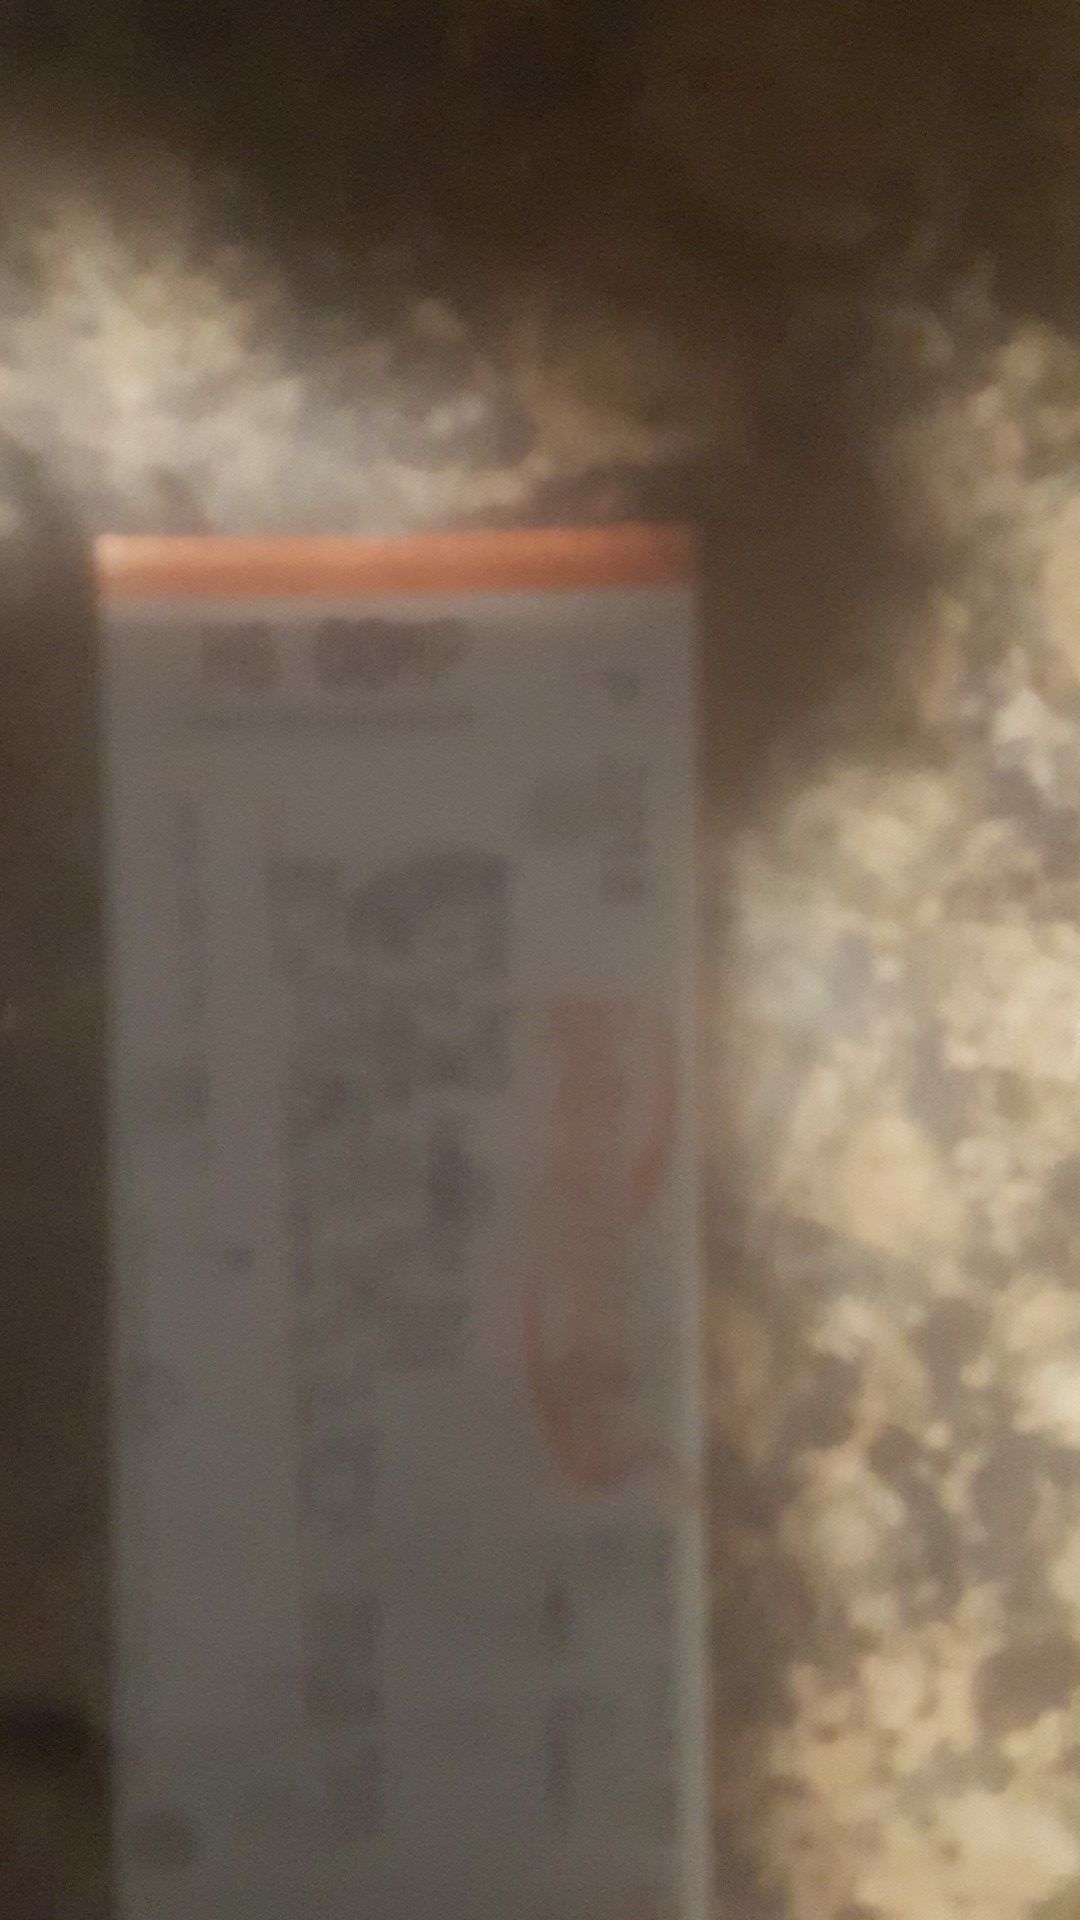 Hershey Park tickets